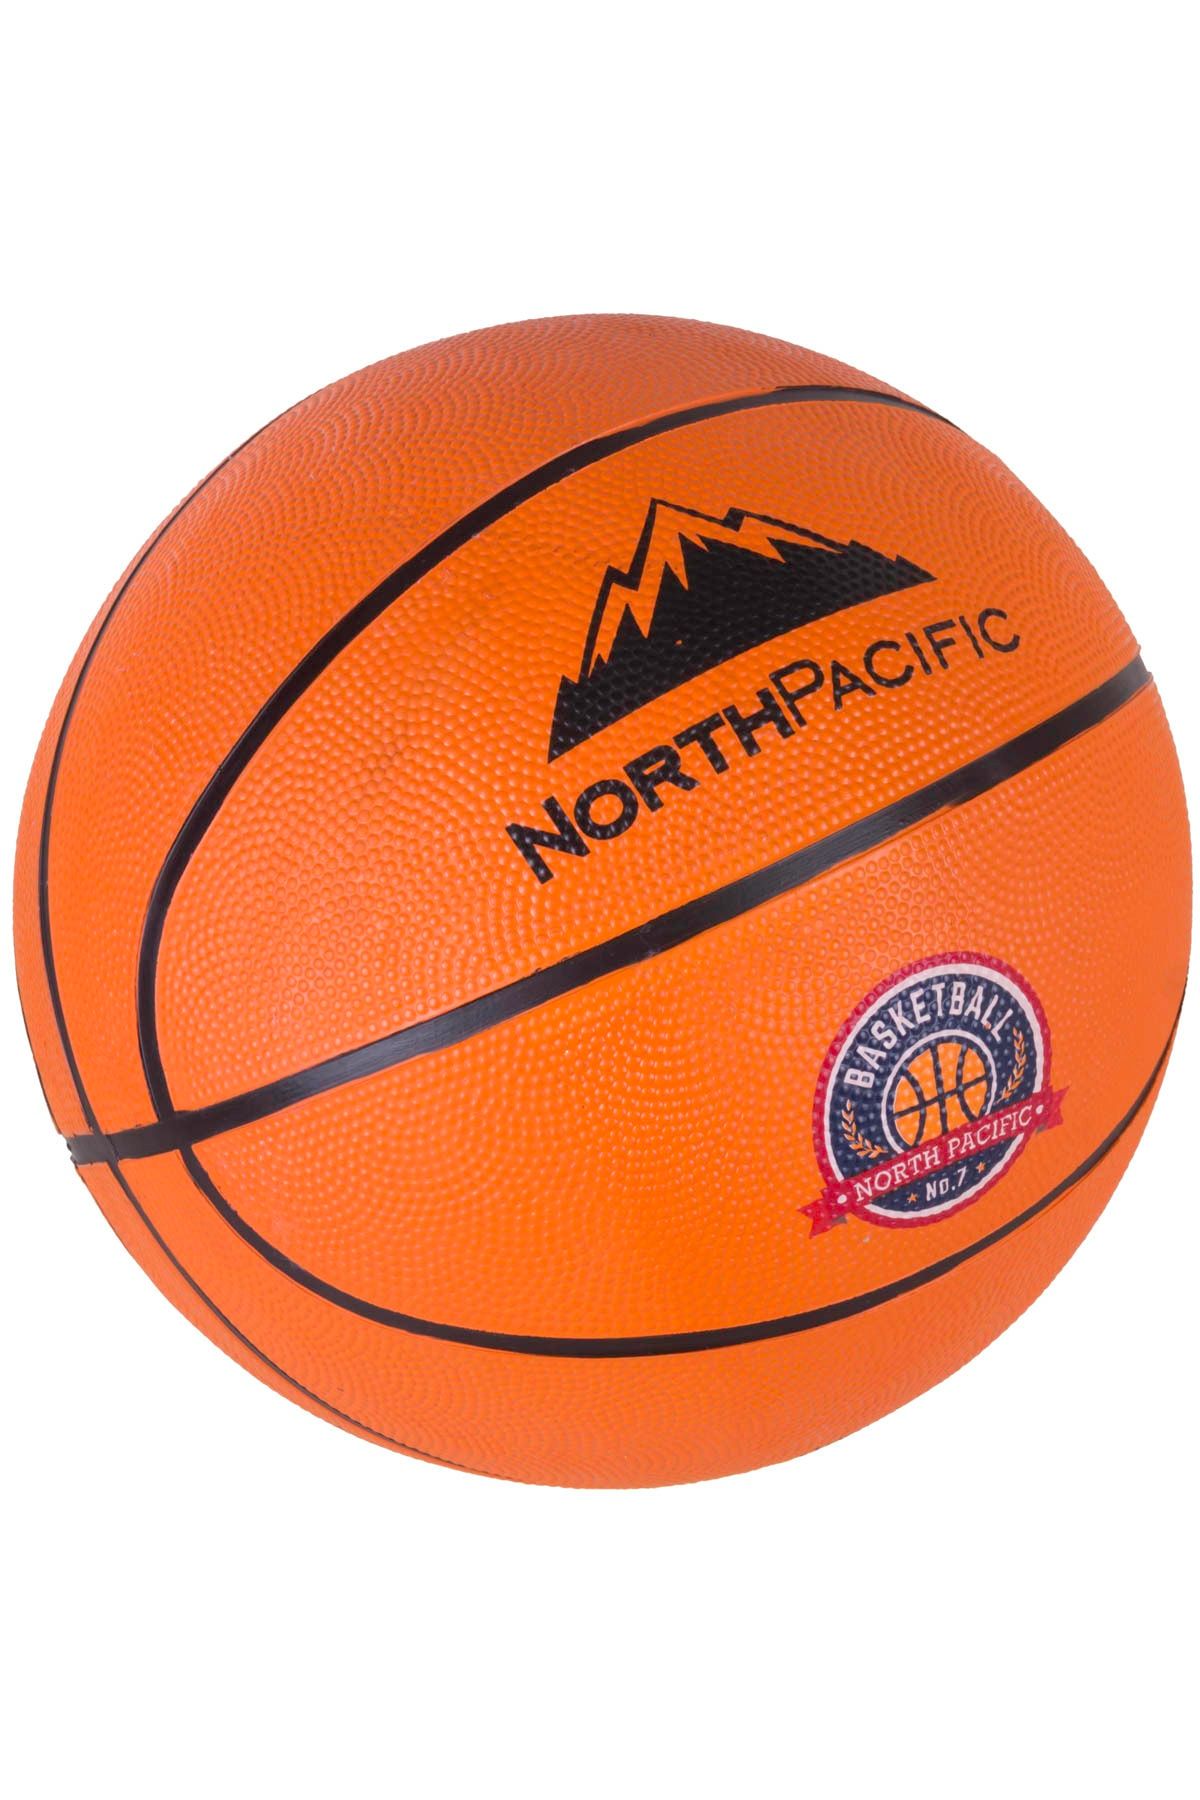 North Pacific Basketbol Topu